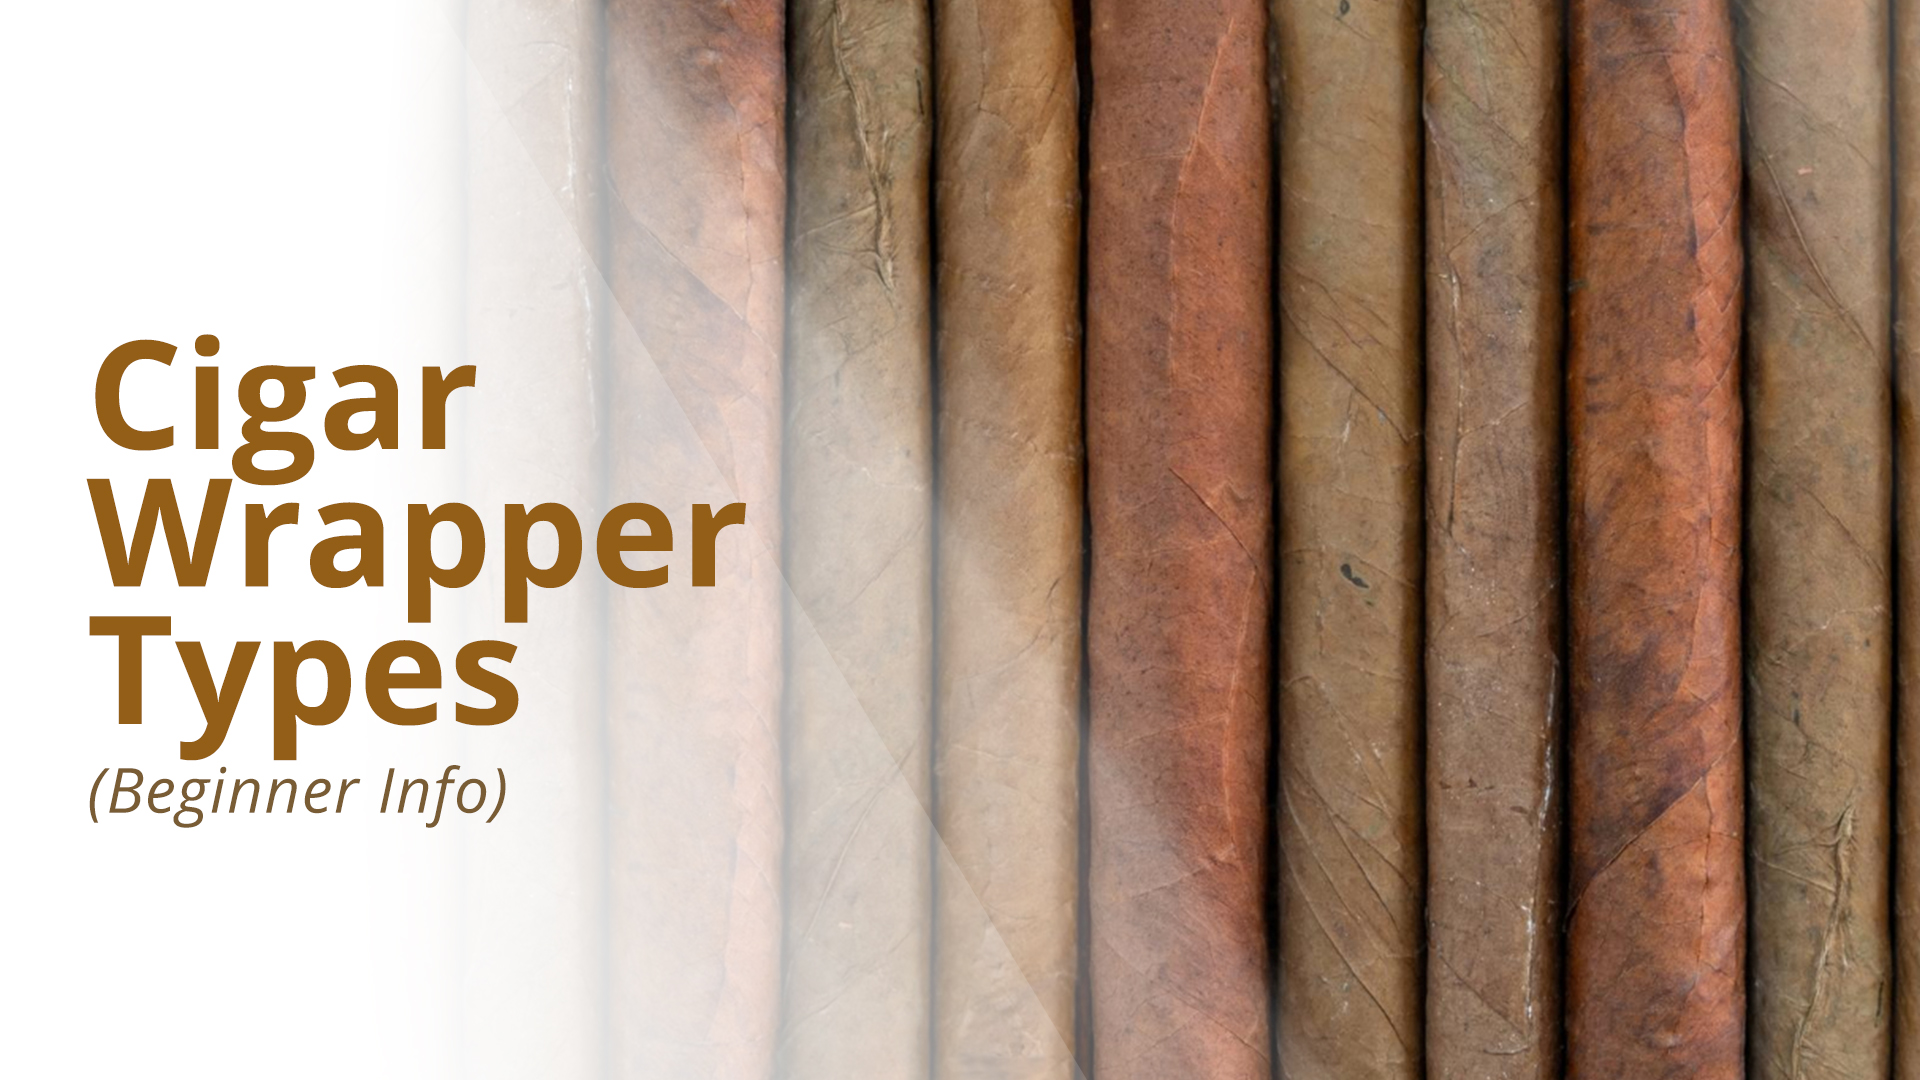 Cigar wrapper types